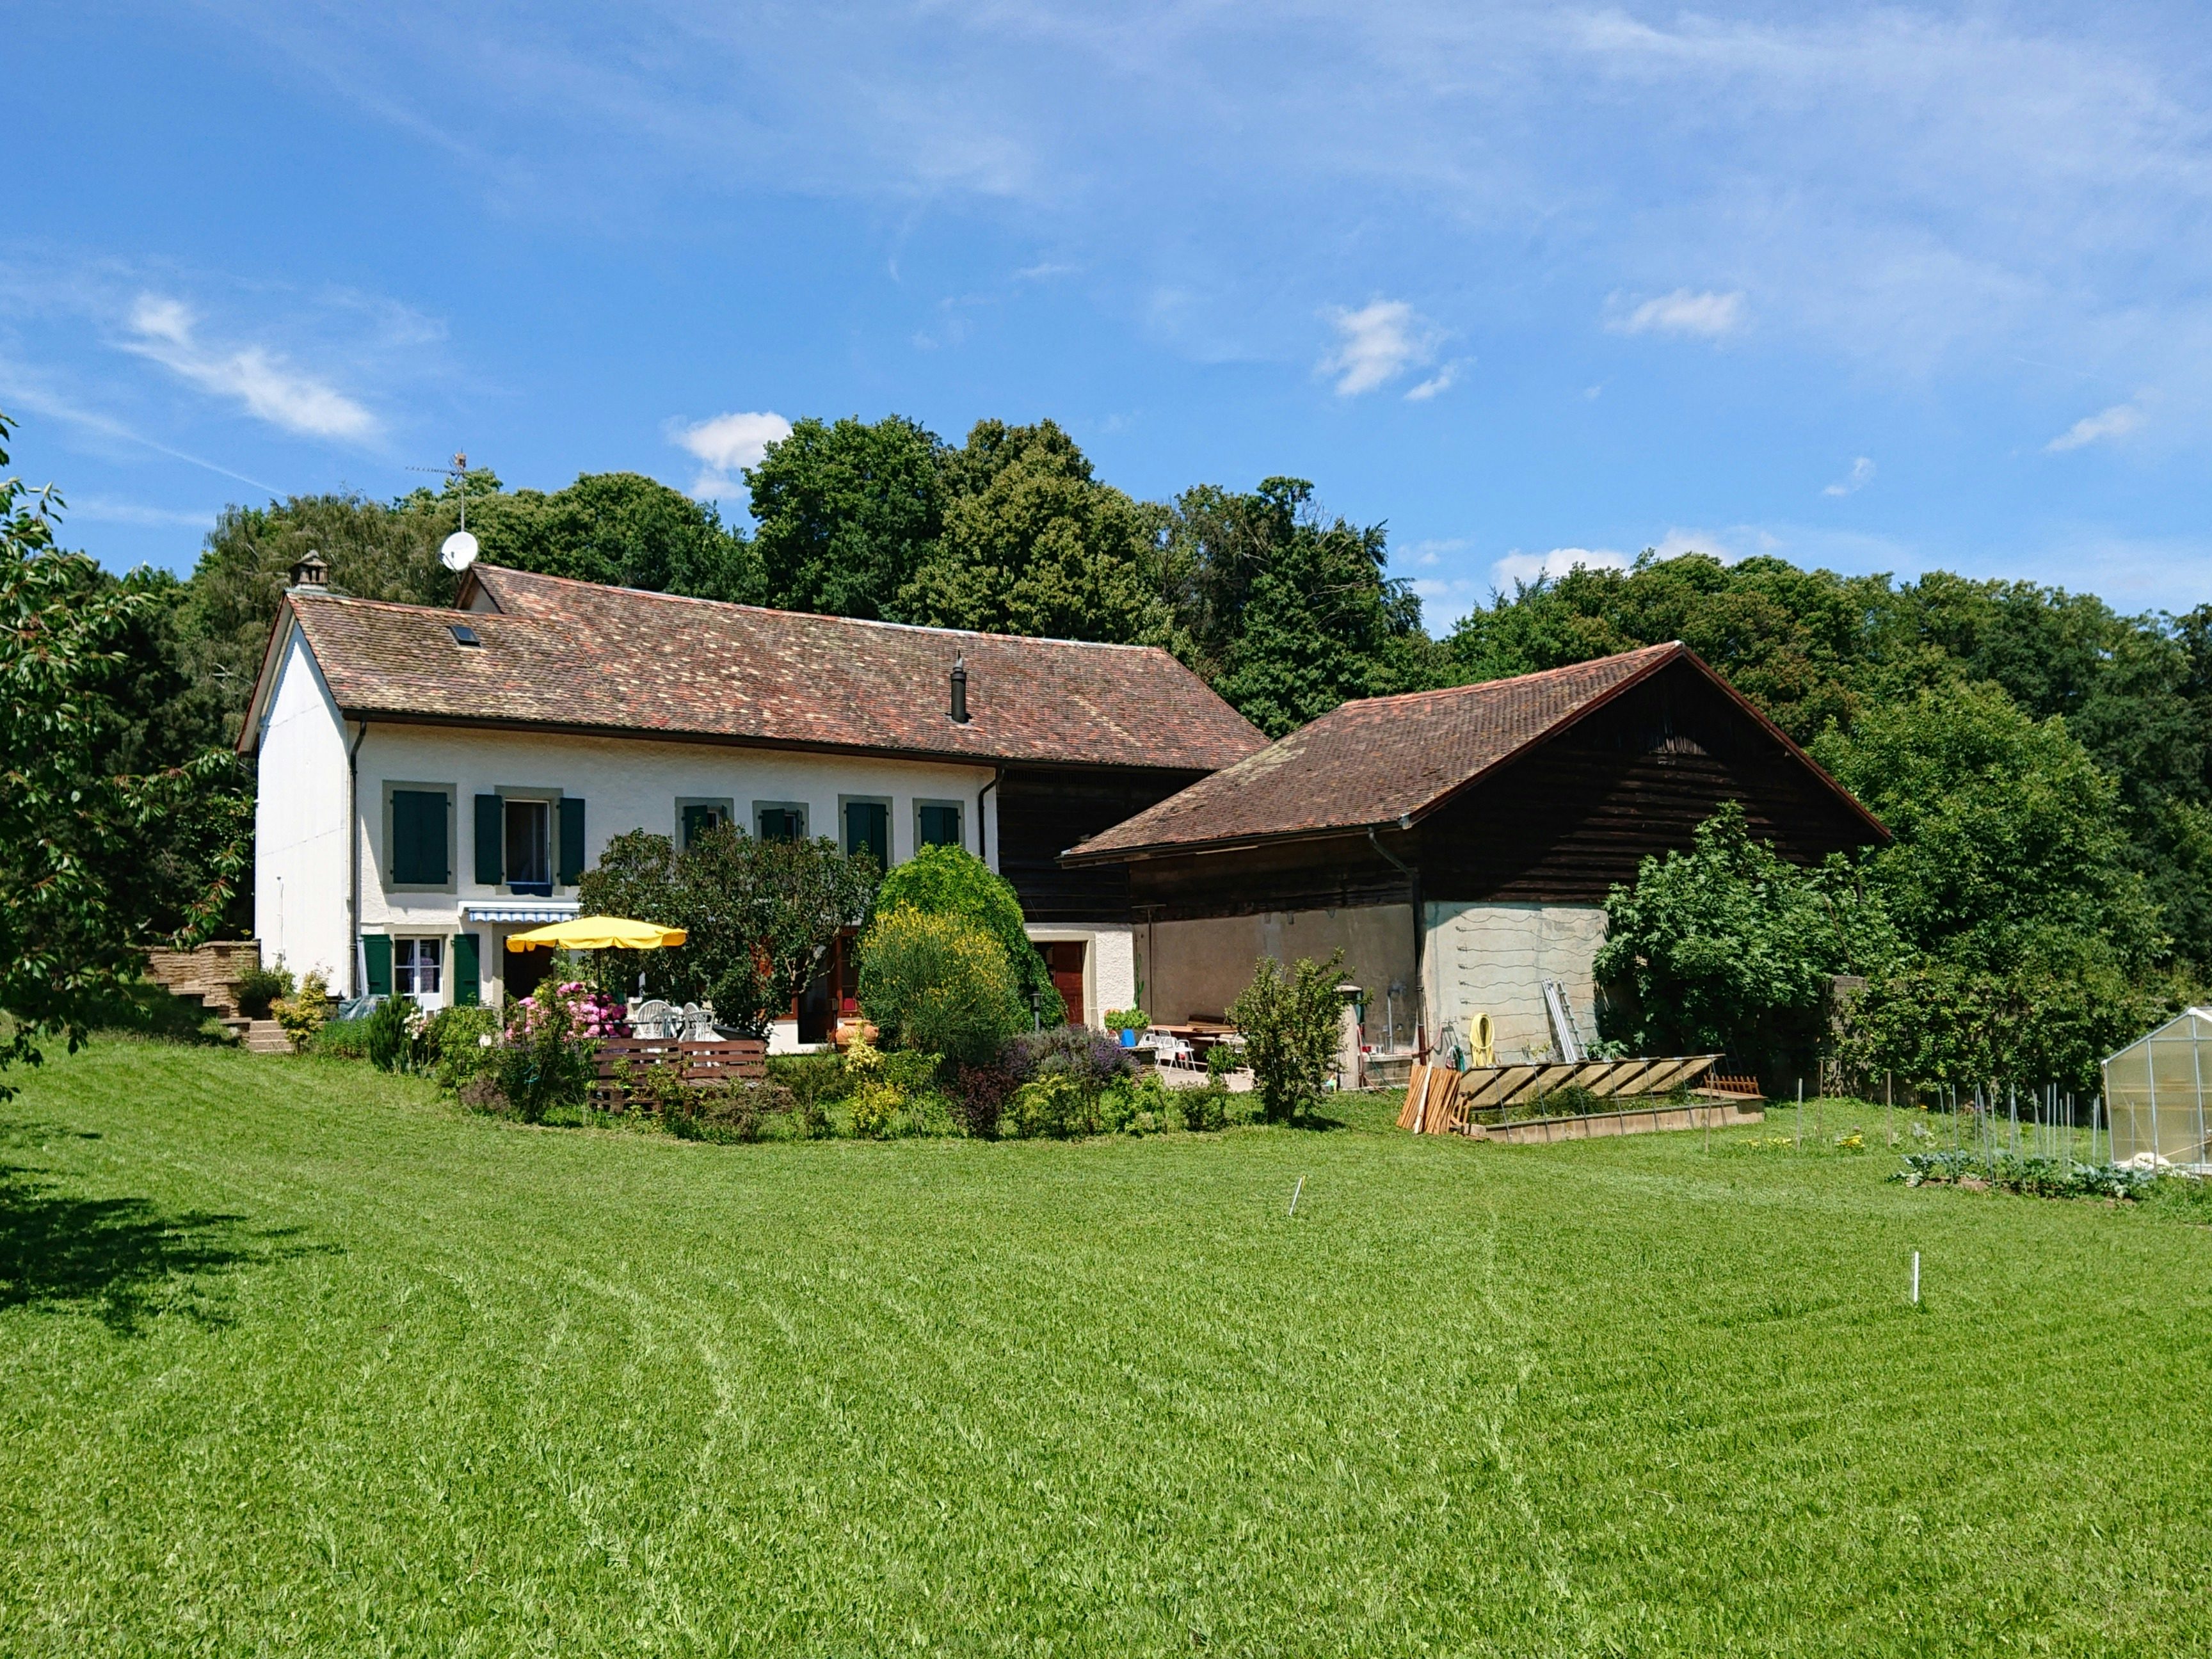 C'doux, Produzent in Saint-Prex Kanton Waadt in der Schweiz, Bild 0